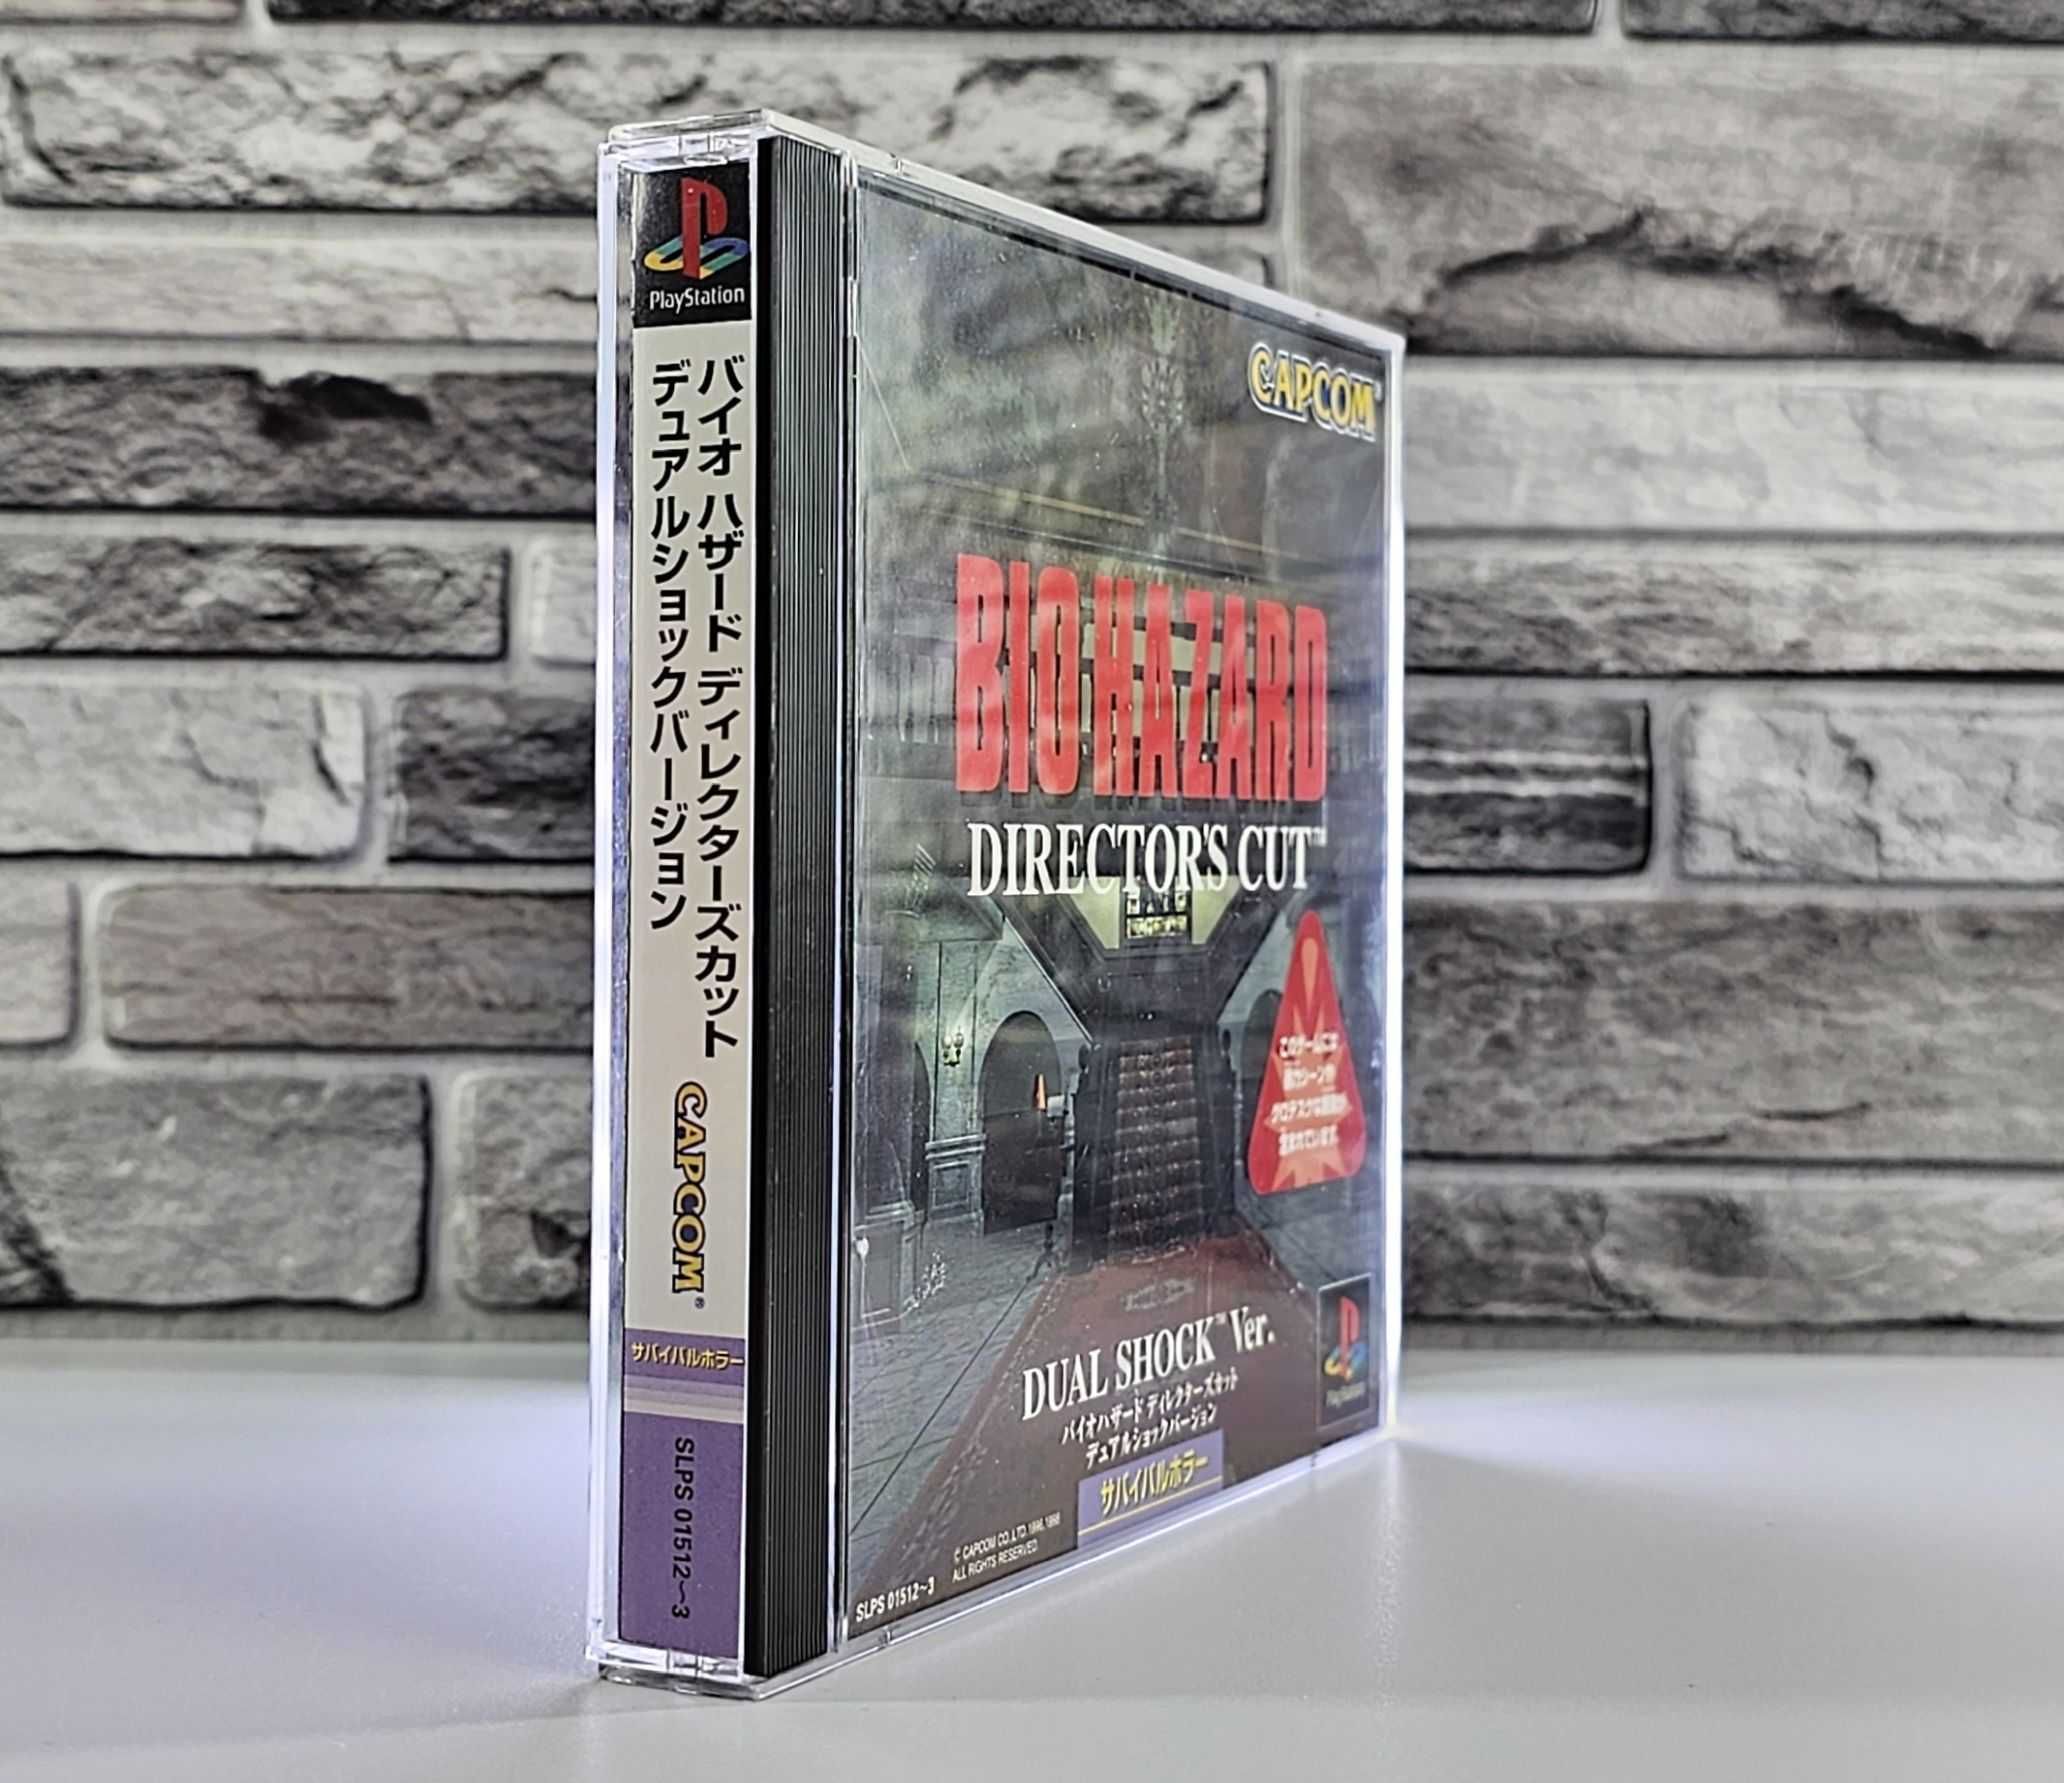 Resident Evil Biohazard Director's Cut Dual Shock ver.